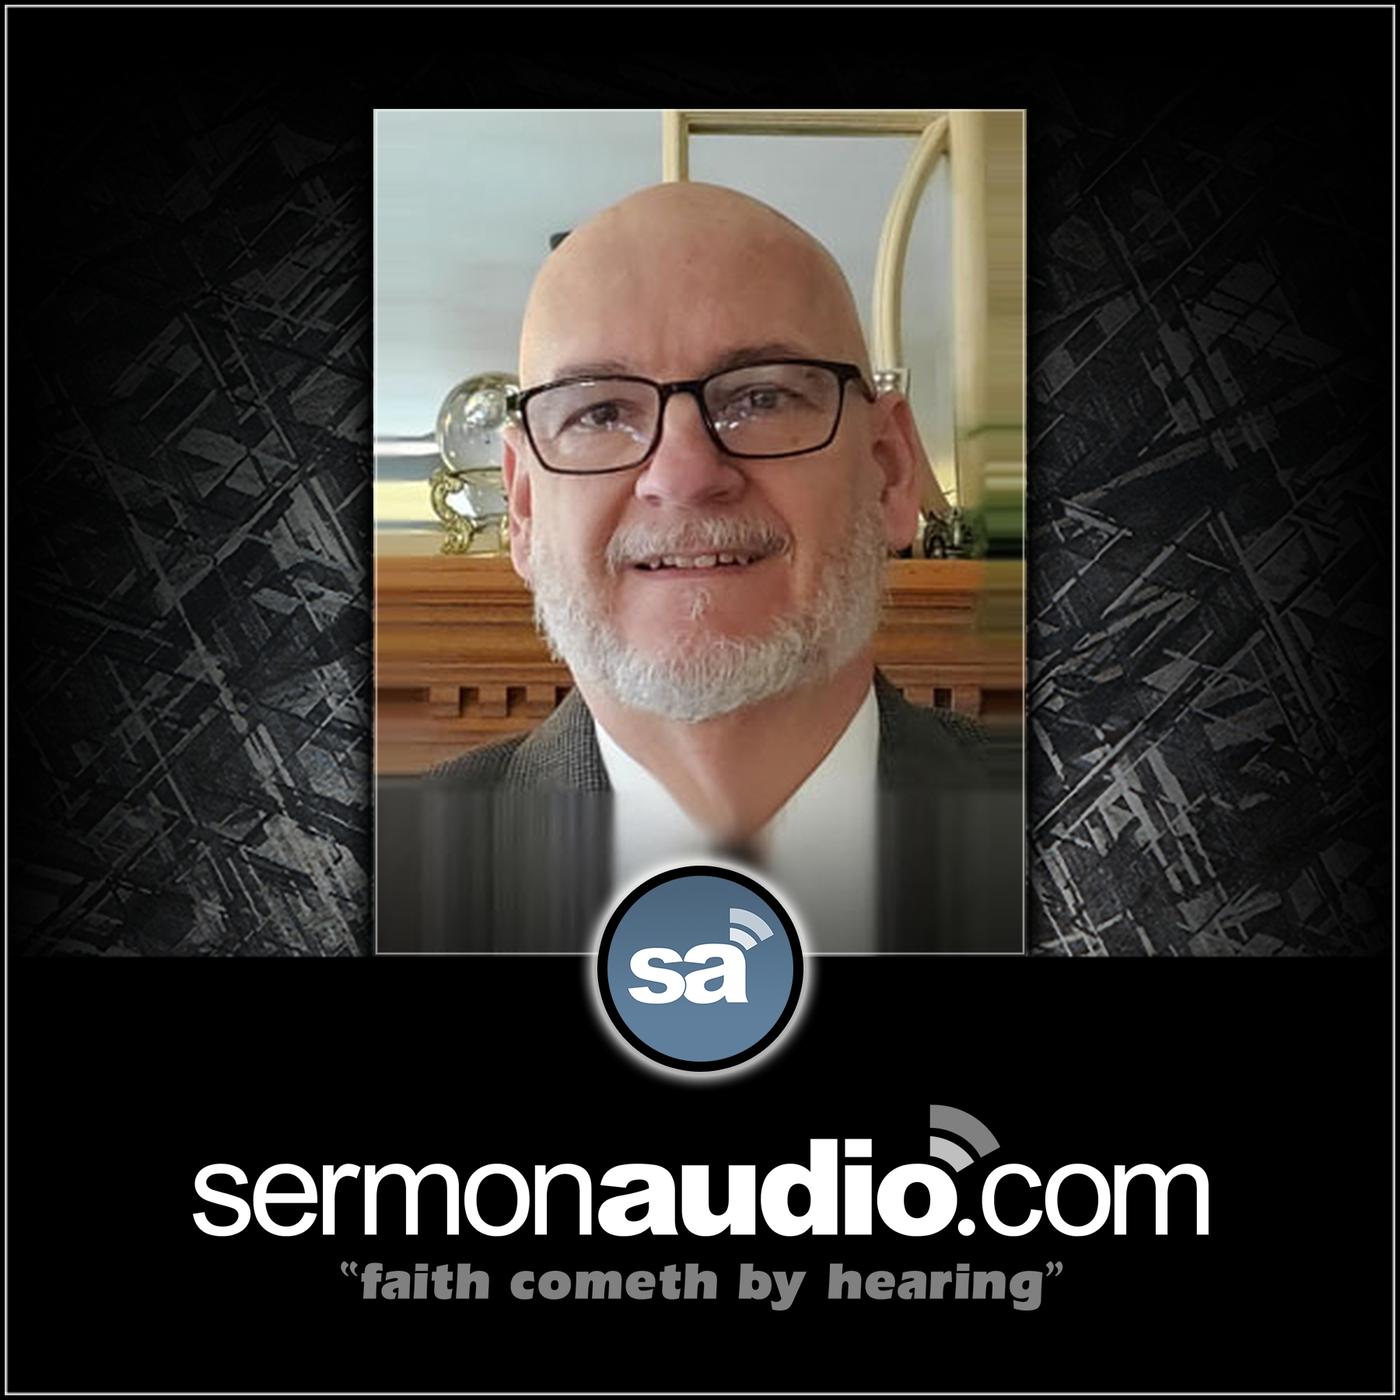 Richard Warmack on SermonAudio